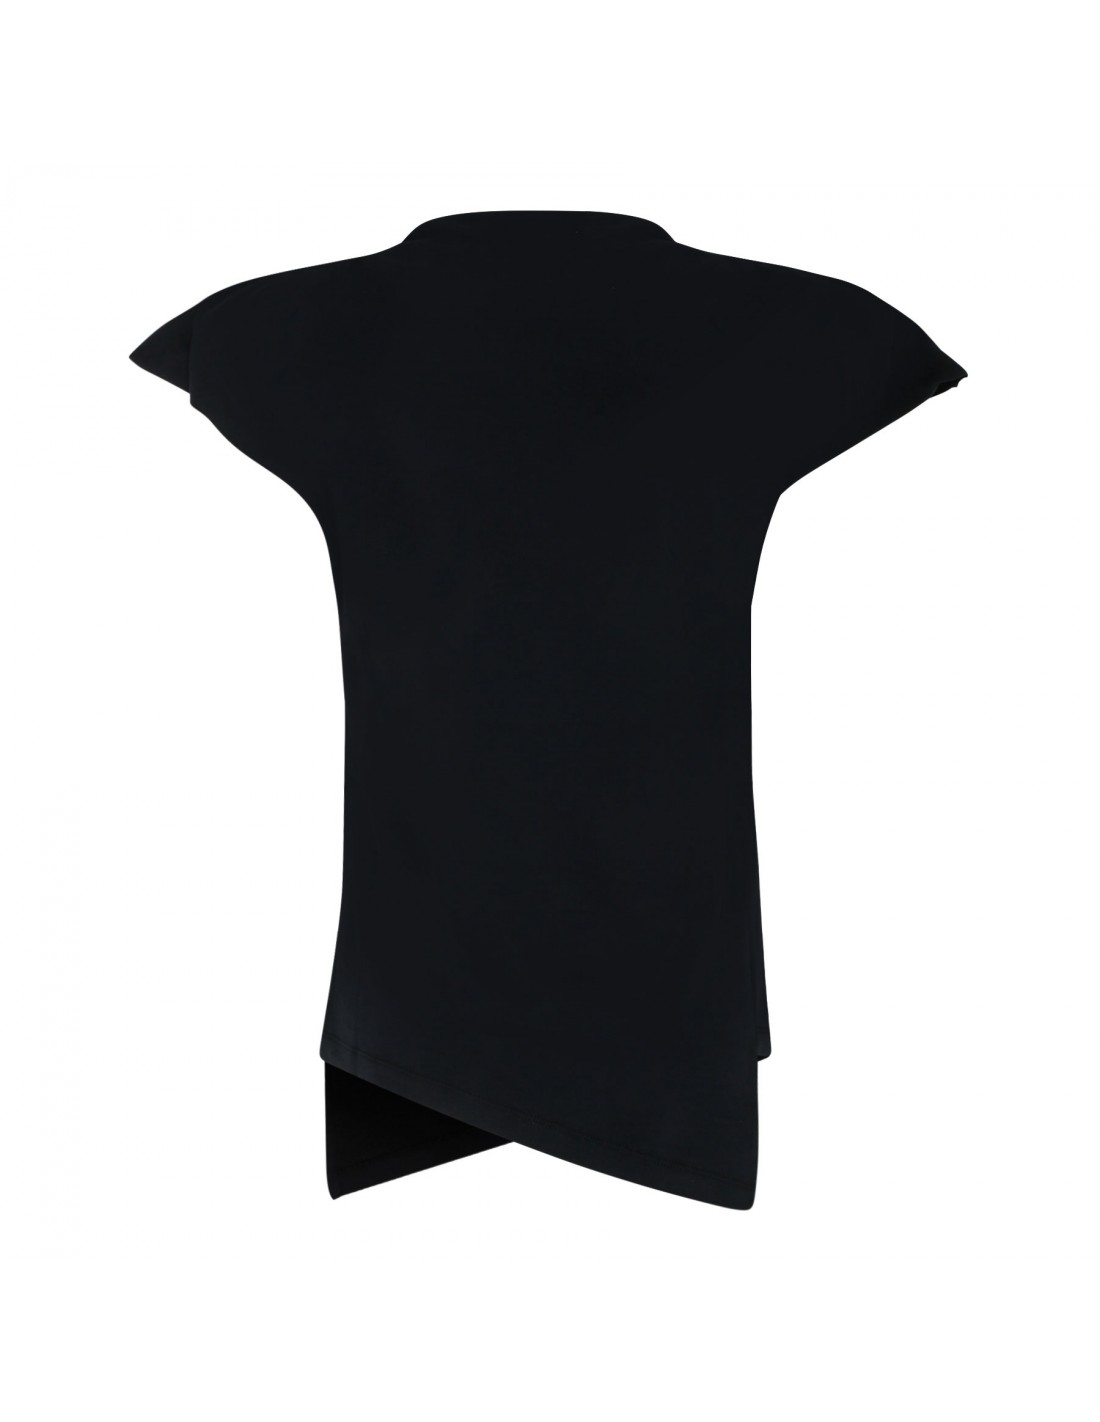 Sebani black T-shirt